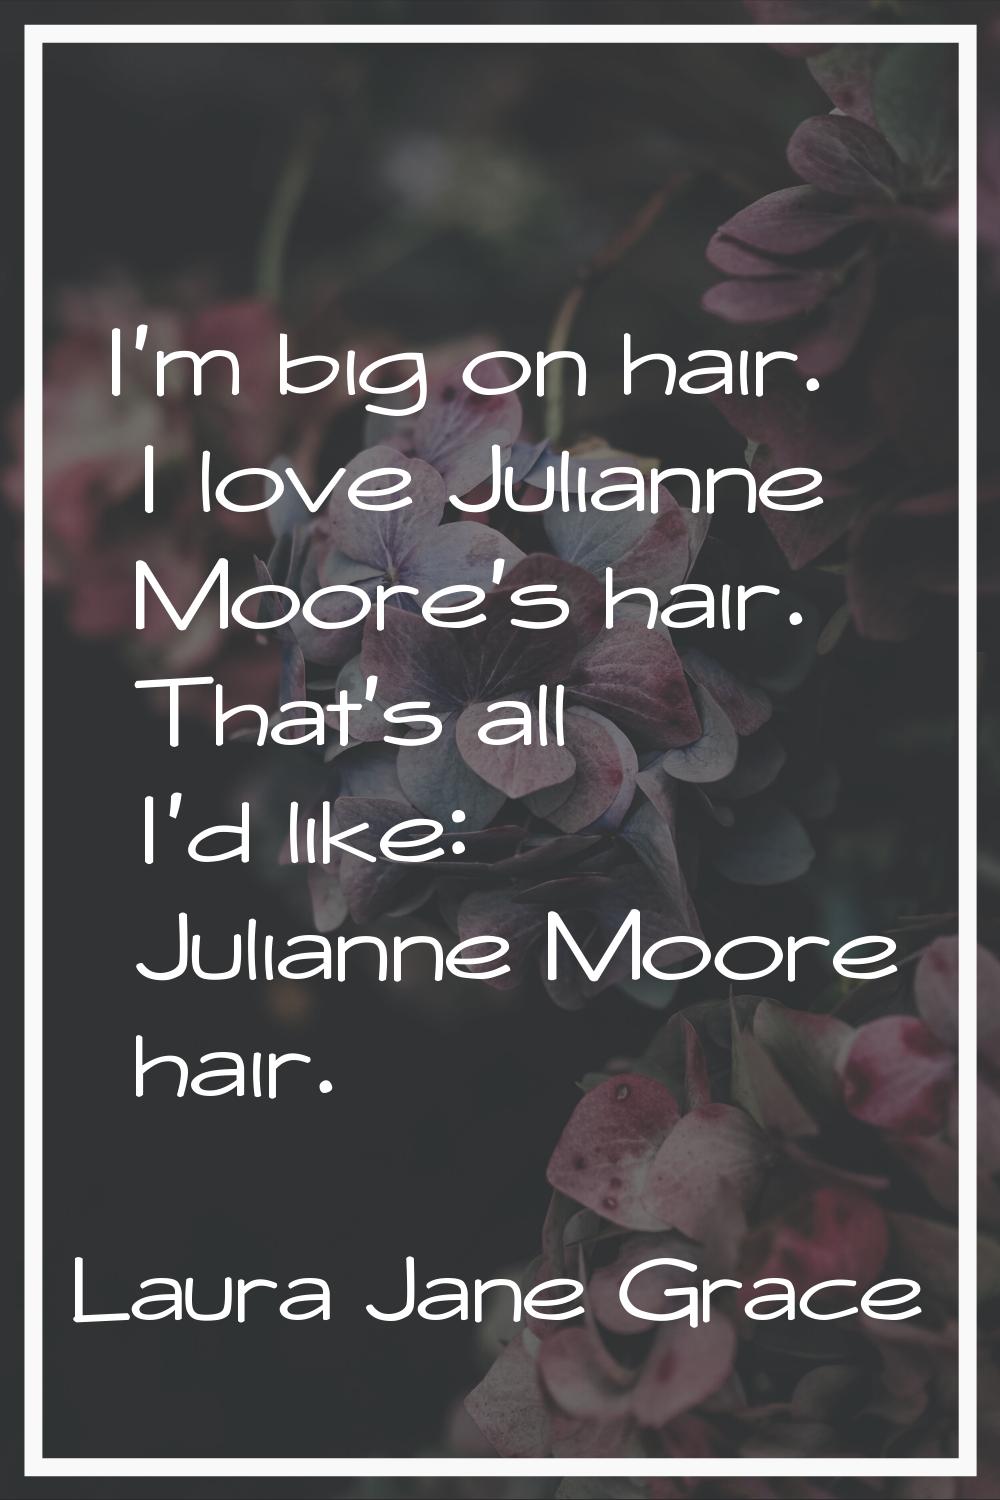 I'm big on hair. I love Julianne Moore's hair. That's all I'd like: Julianne Moore hair.